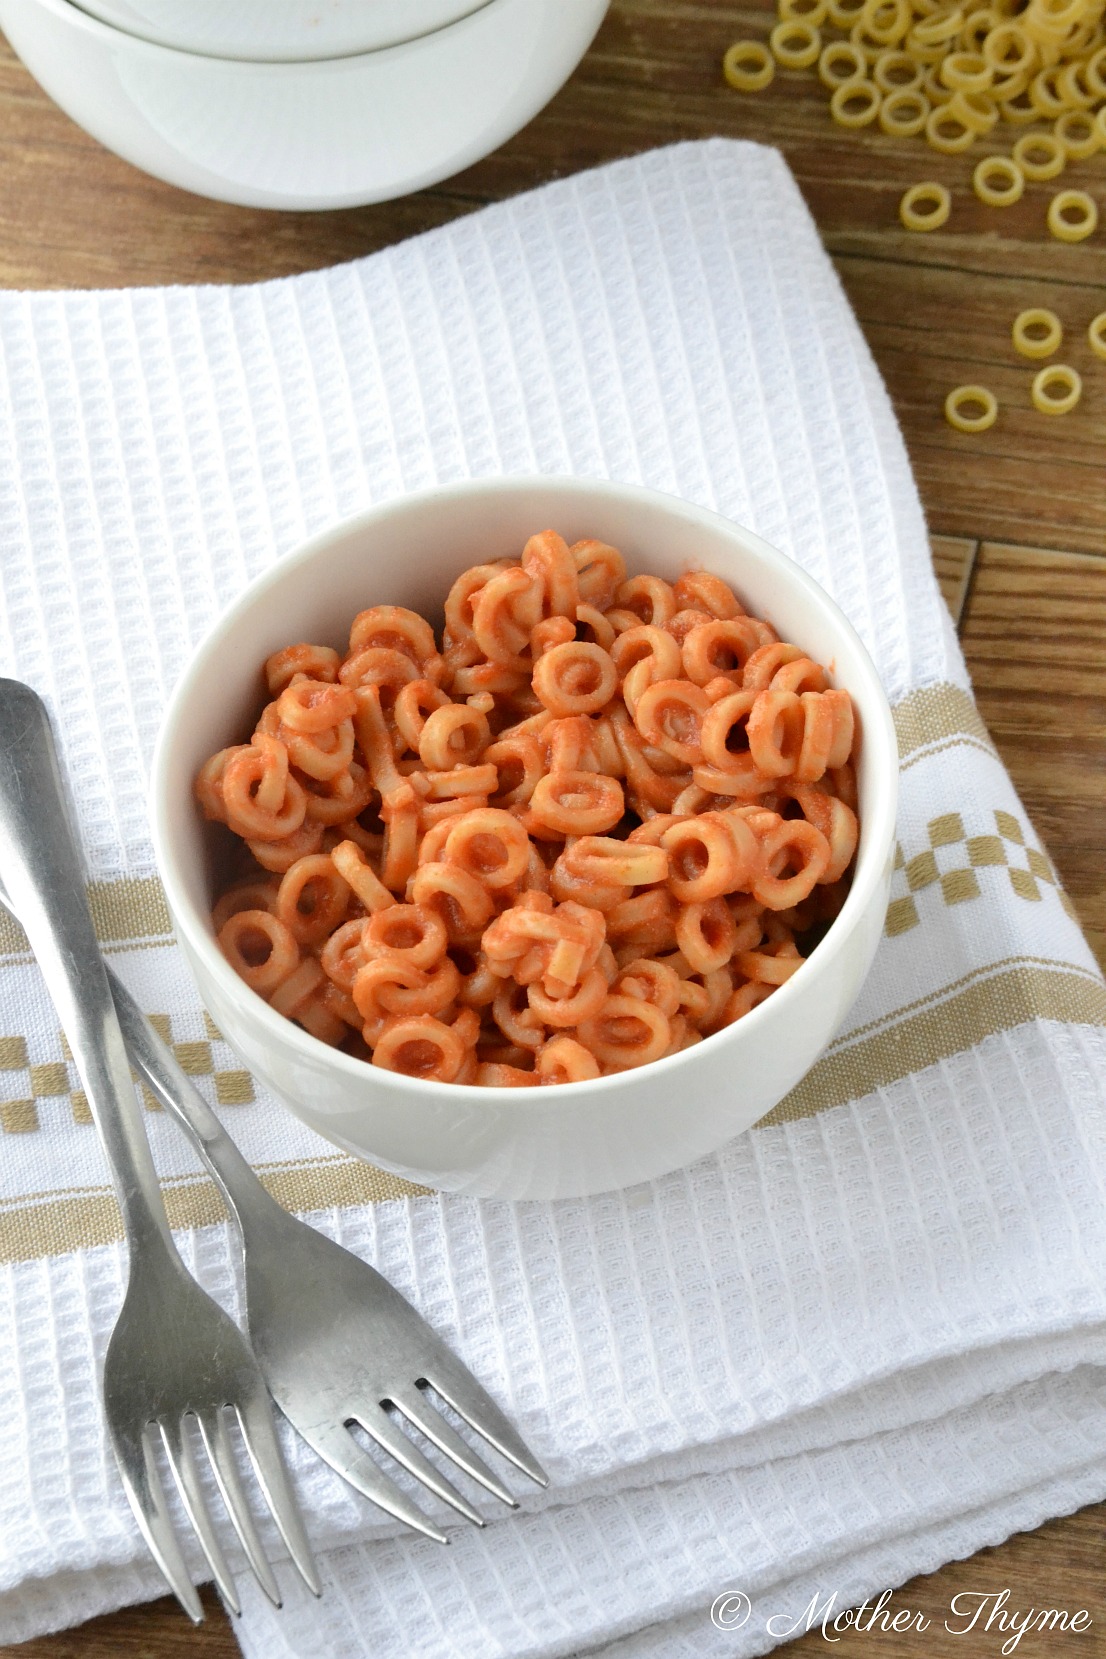 Better-For-You Homemade Spaghetti-Os